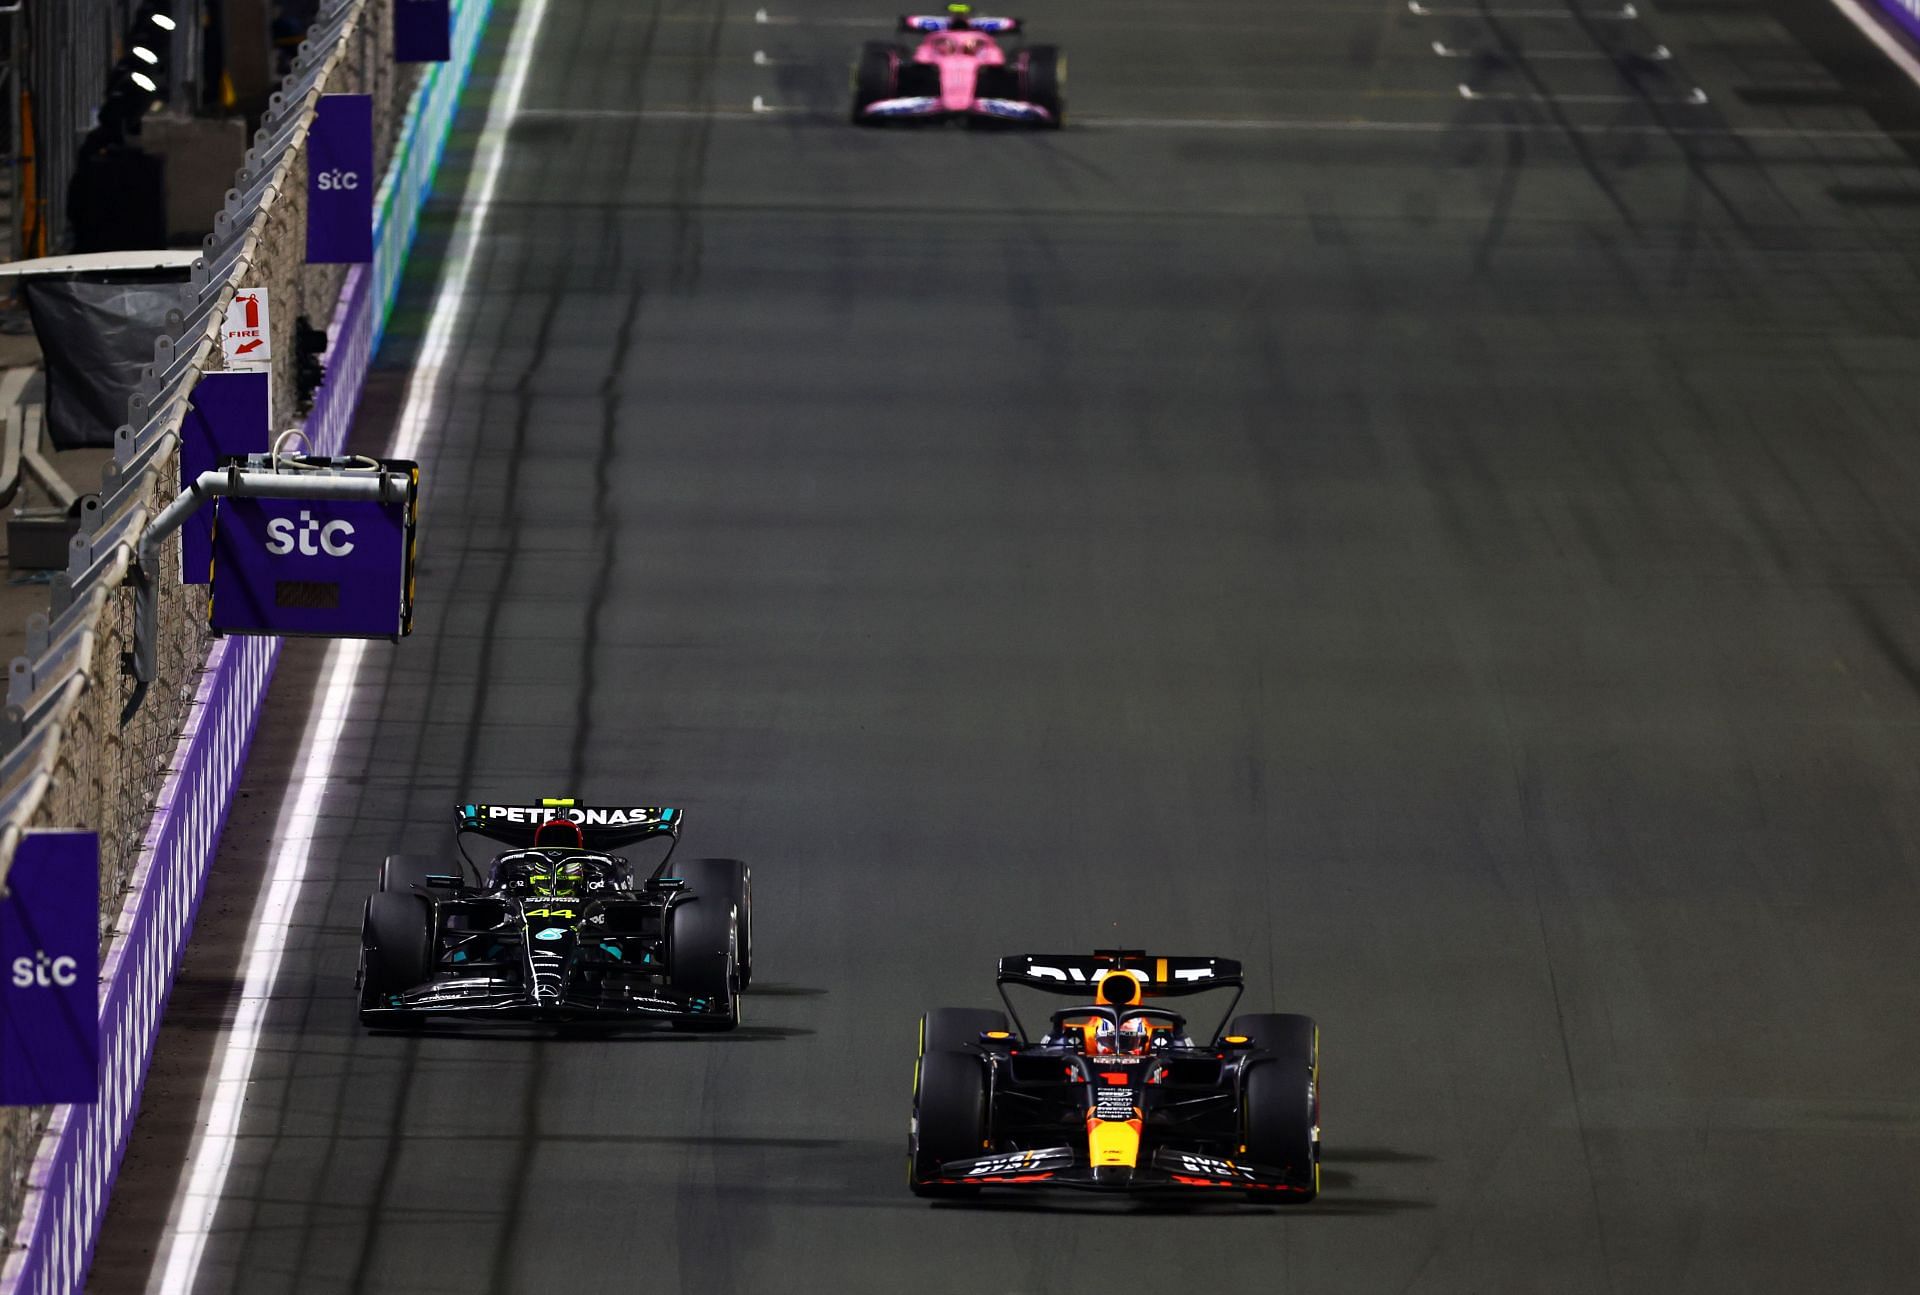 Max Verstappen at the F1 Grand Prix of Saudi Arabia [in the car in front]